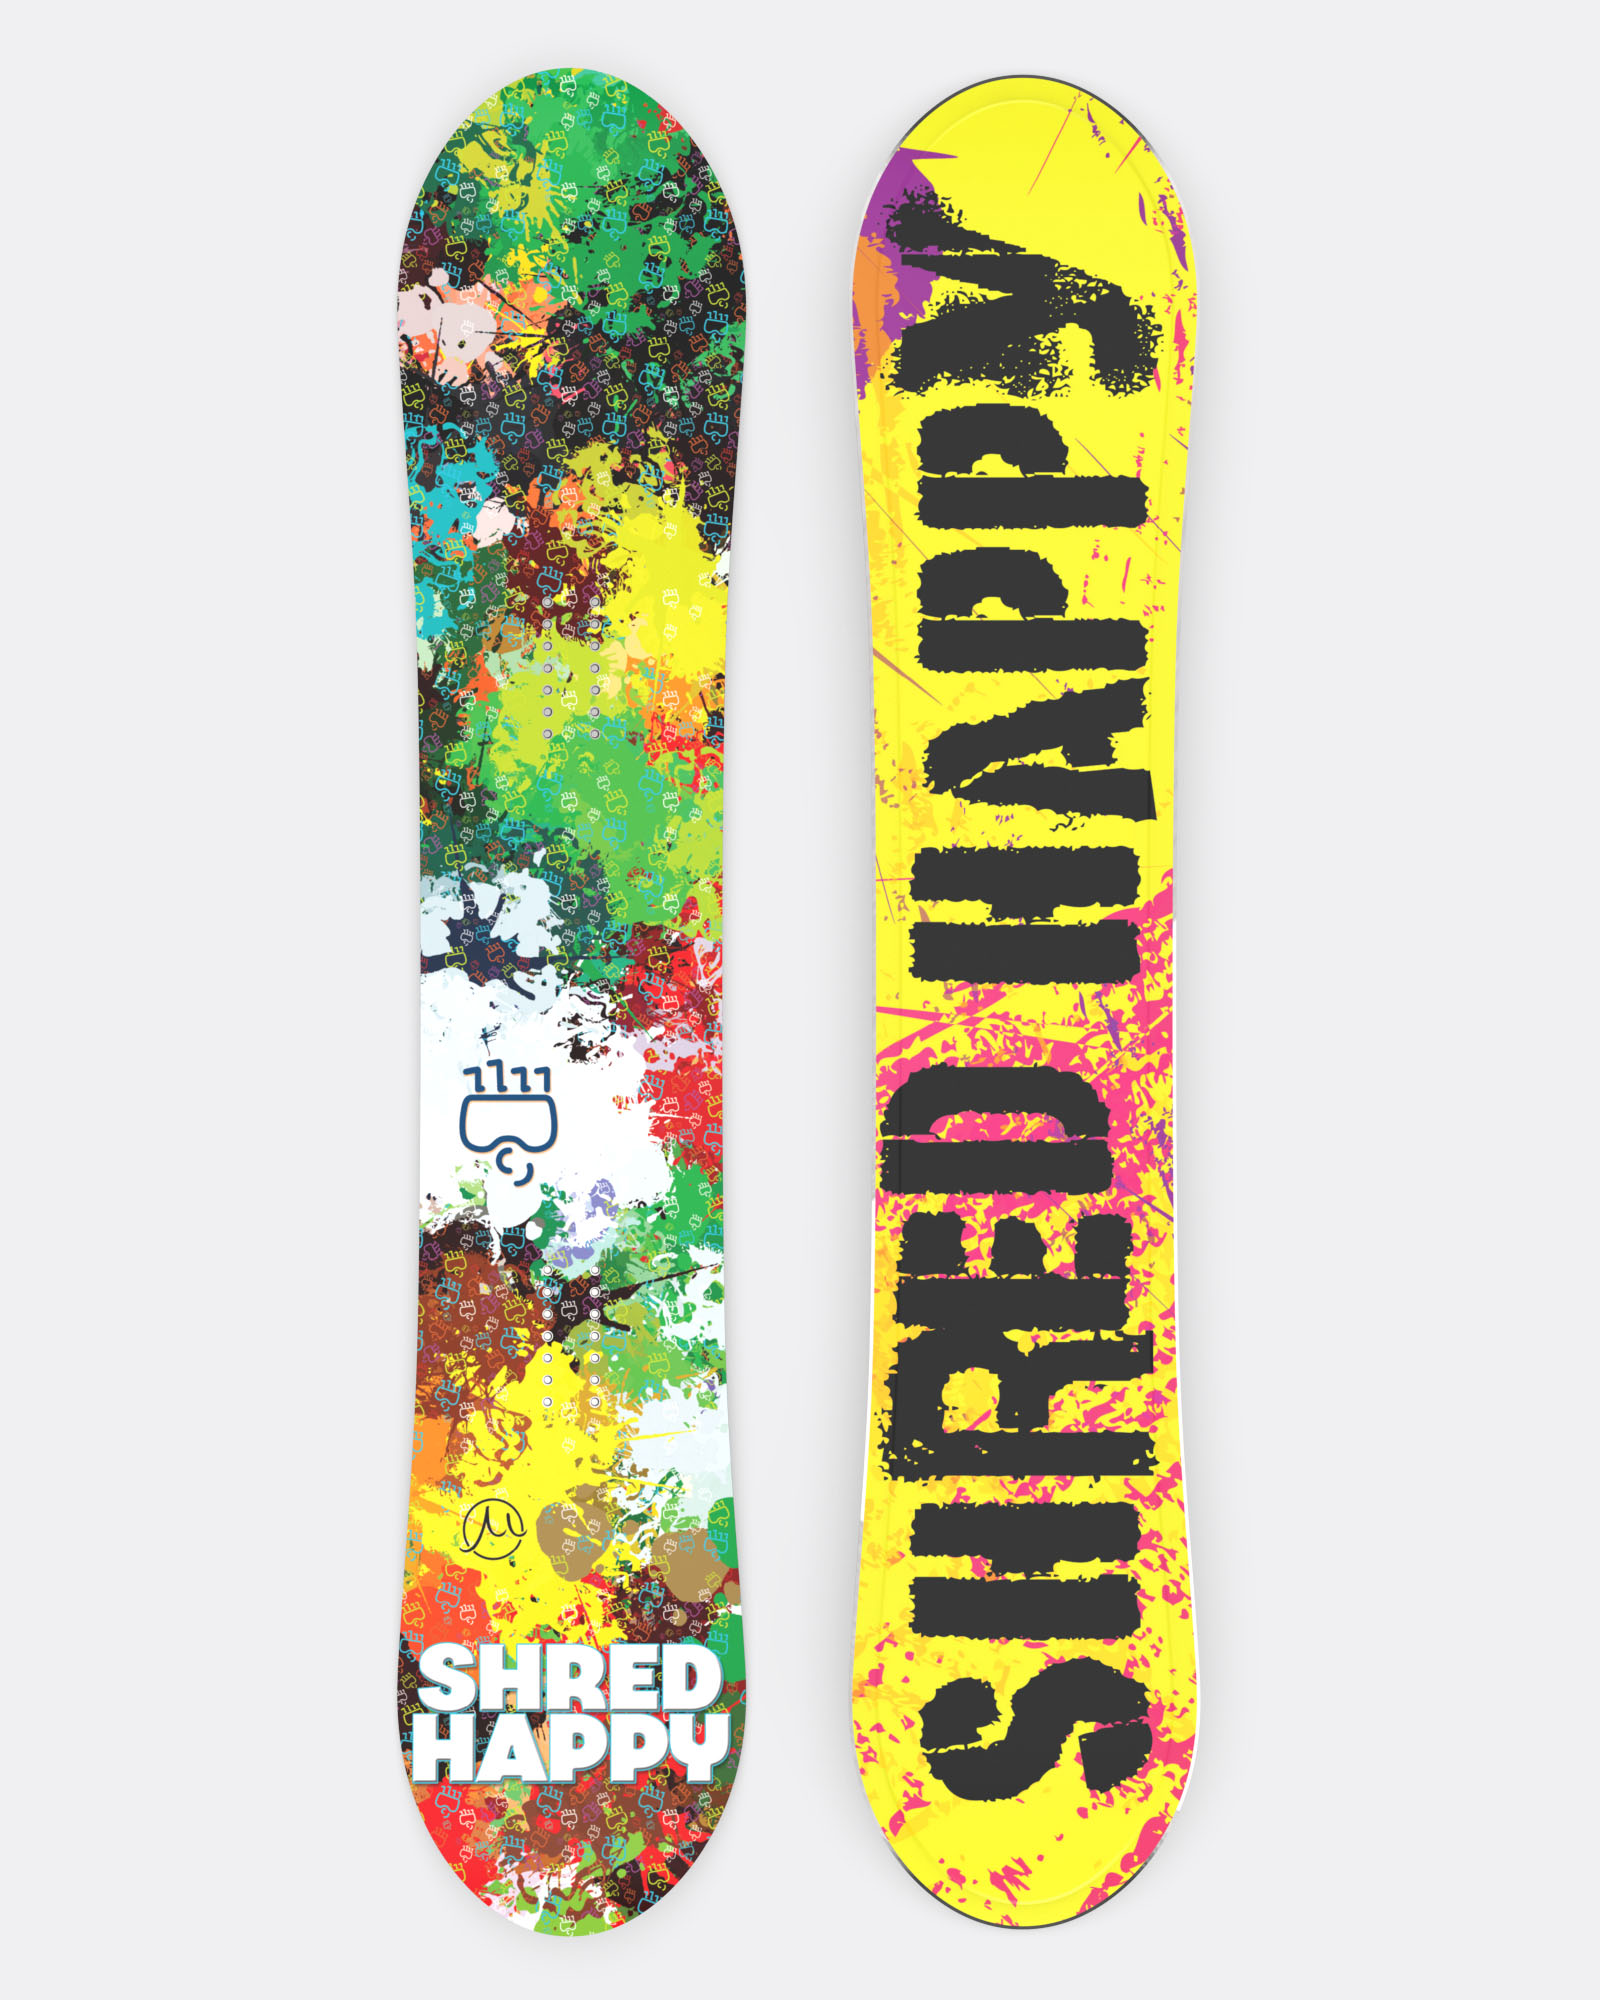 Shred Happy graphics